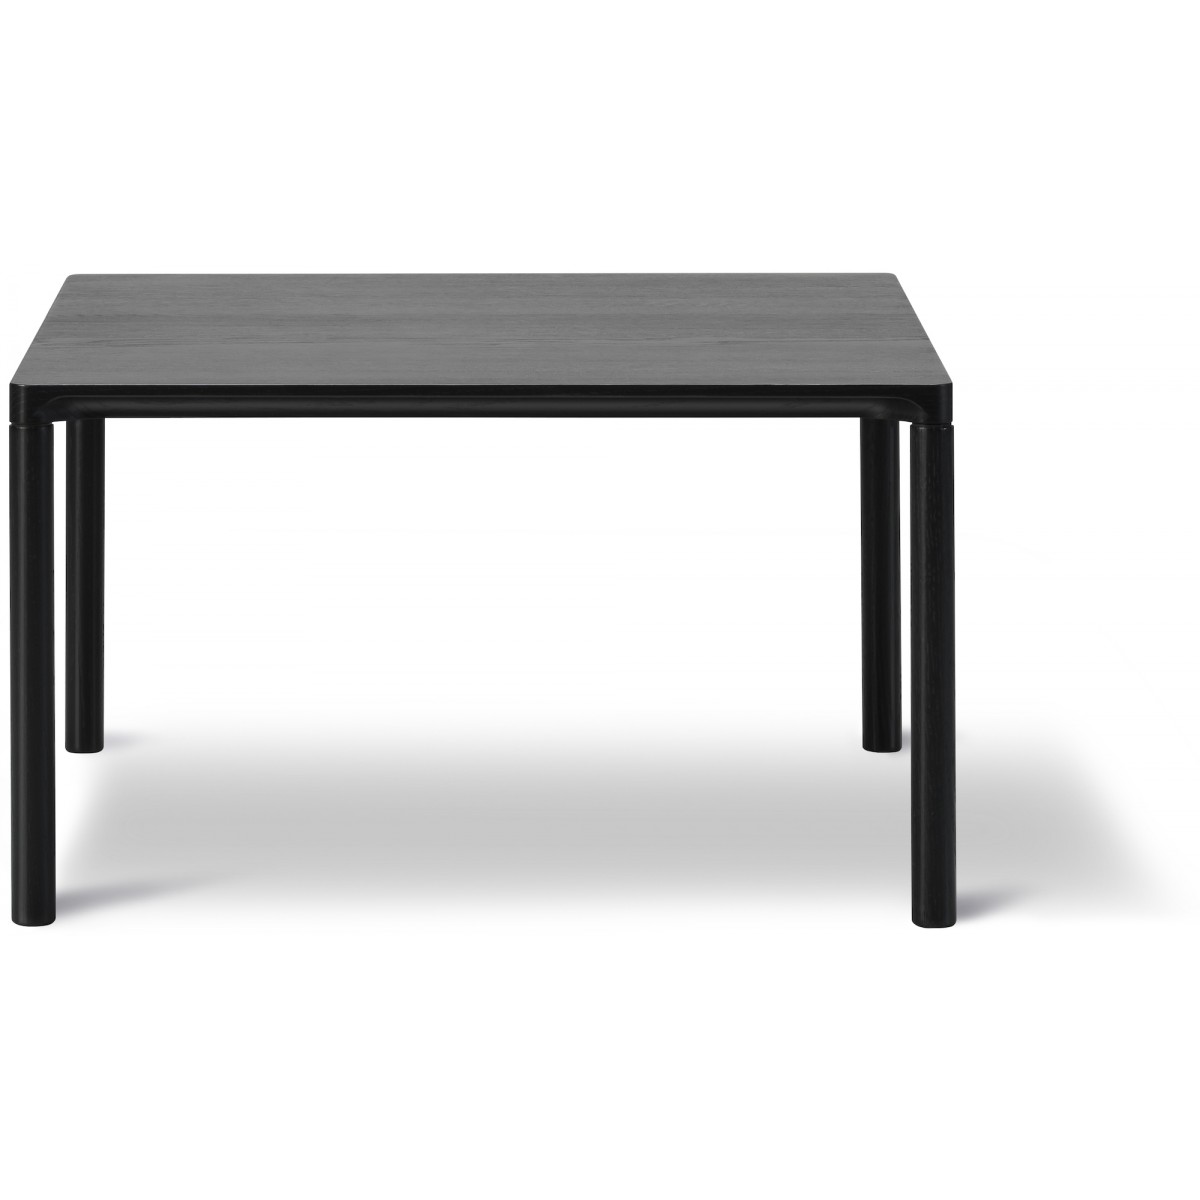 black lacquered oak – 63 x 63 cm – Piloti 6725 coffee table